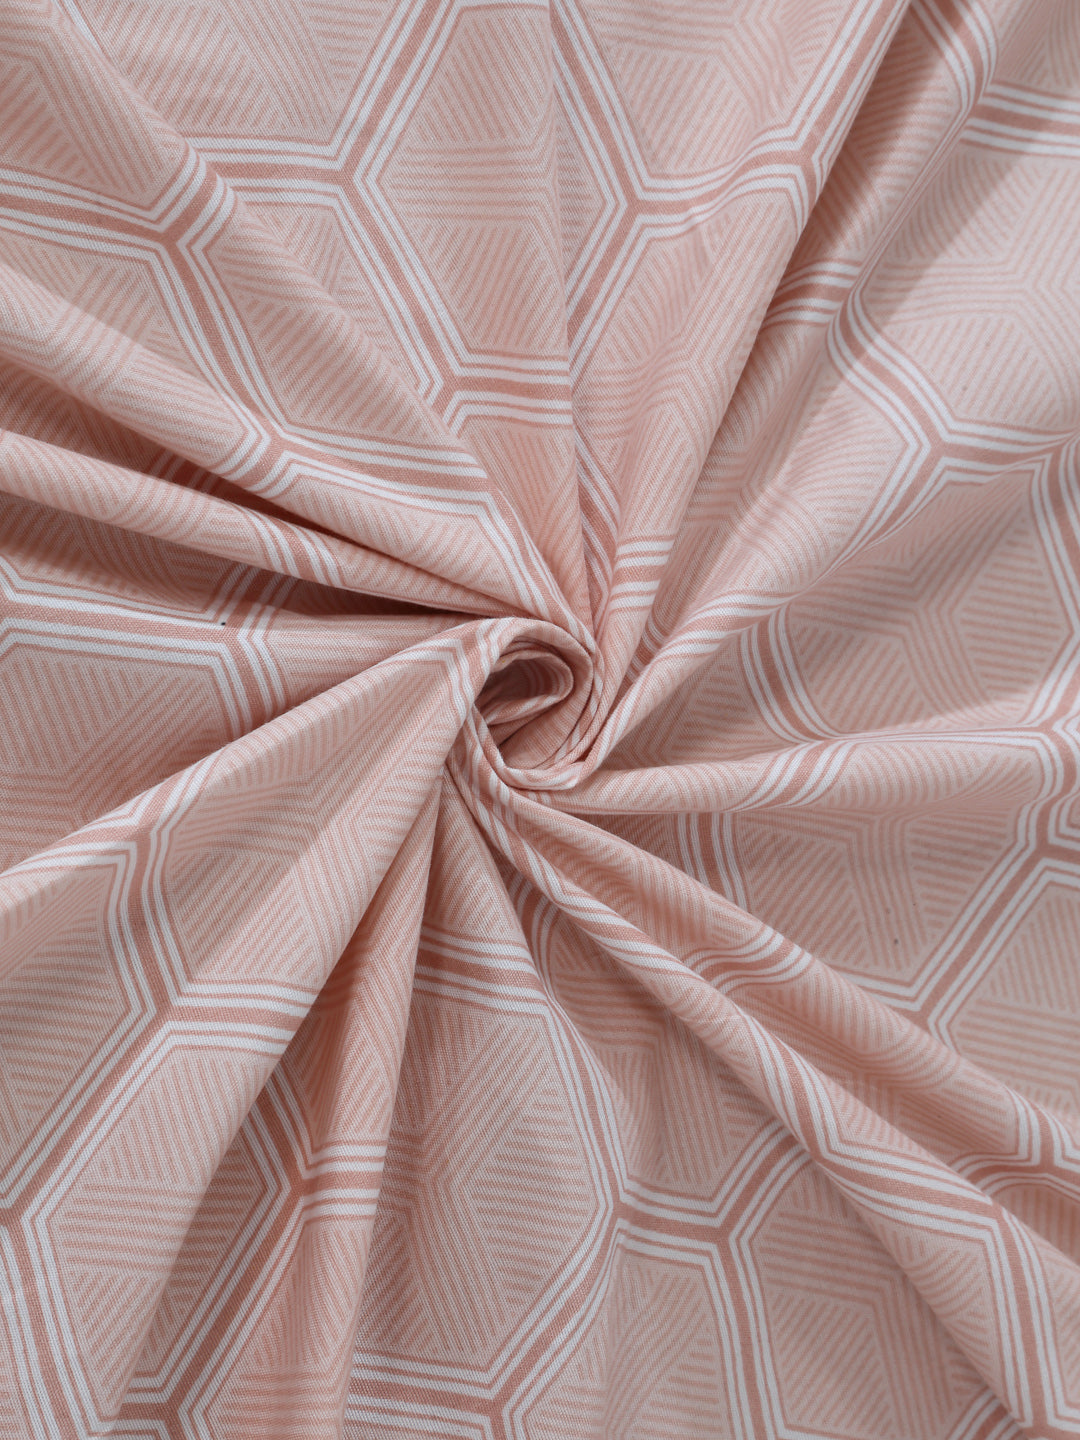 Arrabi Peach Geometric TC Cotton Blend King Size Bedsheet with 2 Pillow Covers (250 X 215 cm)